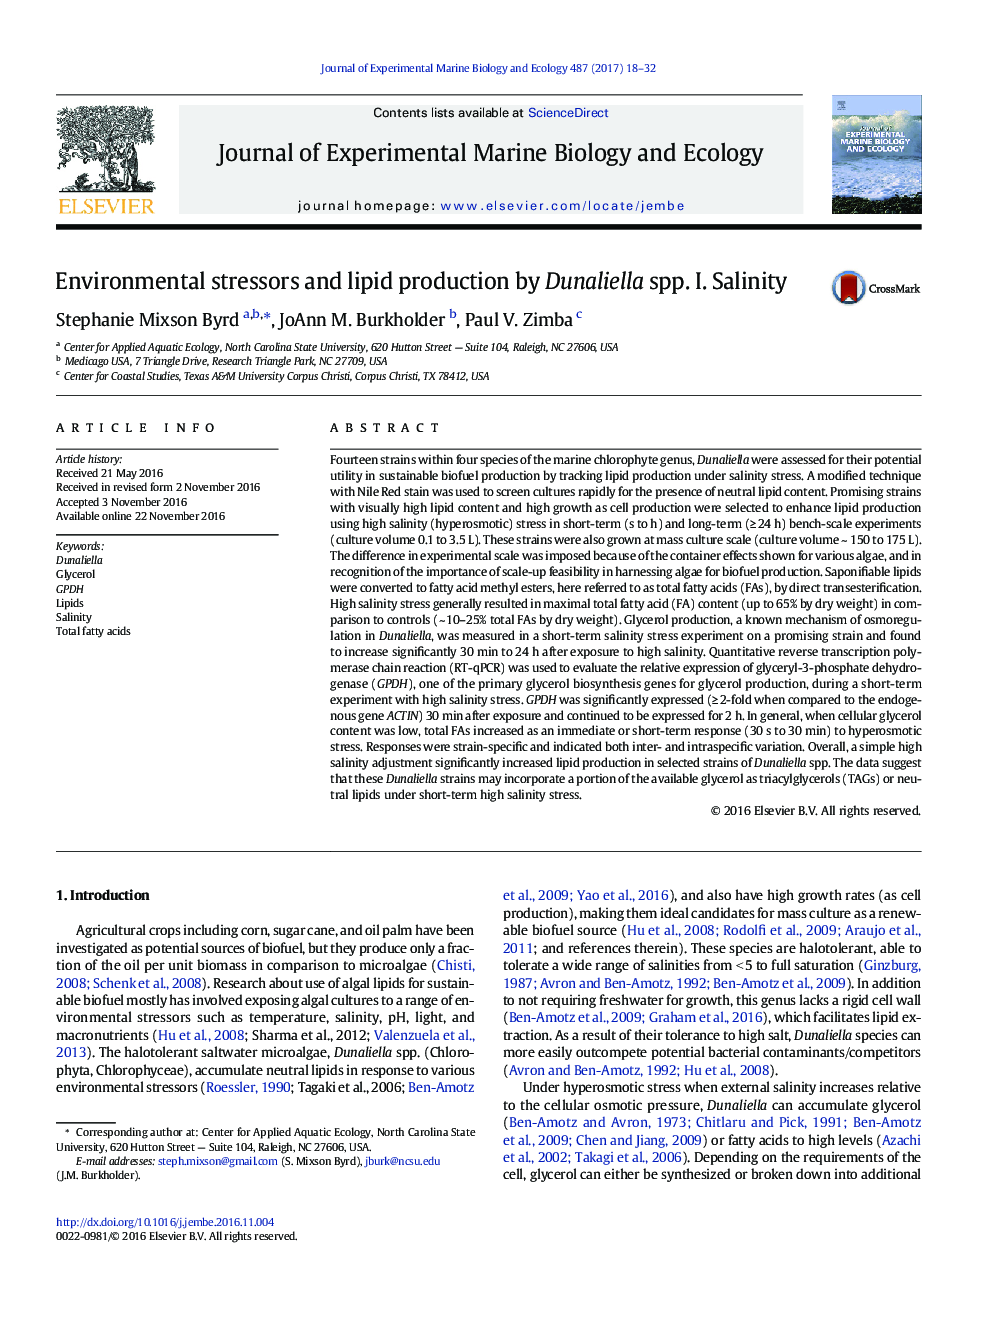 Environmental stressors and lipid production by Dunaliella spp. I. Salinity